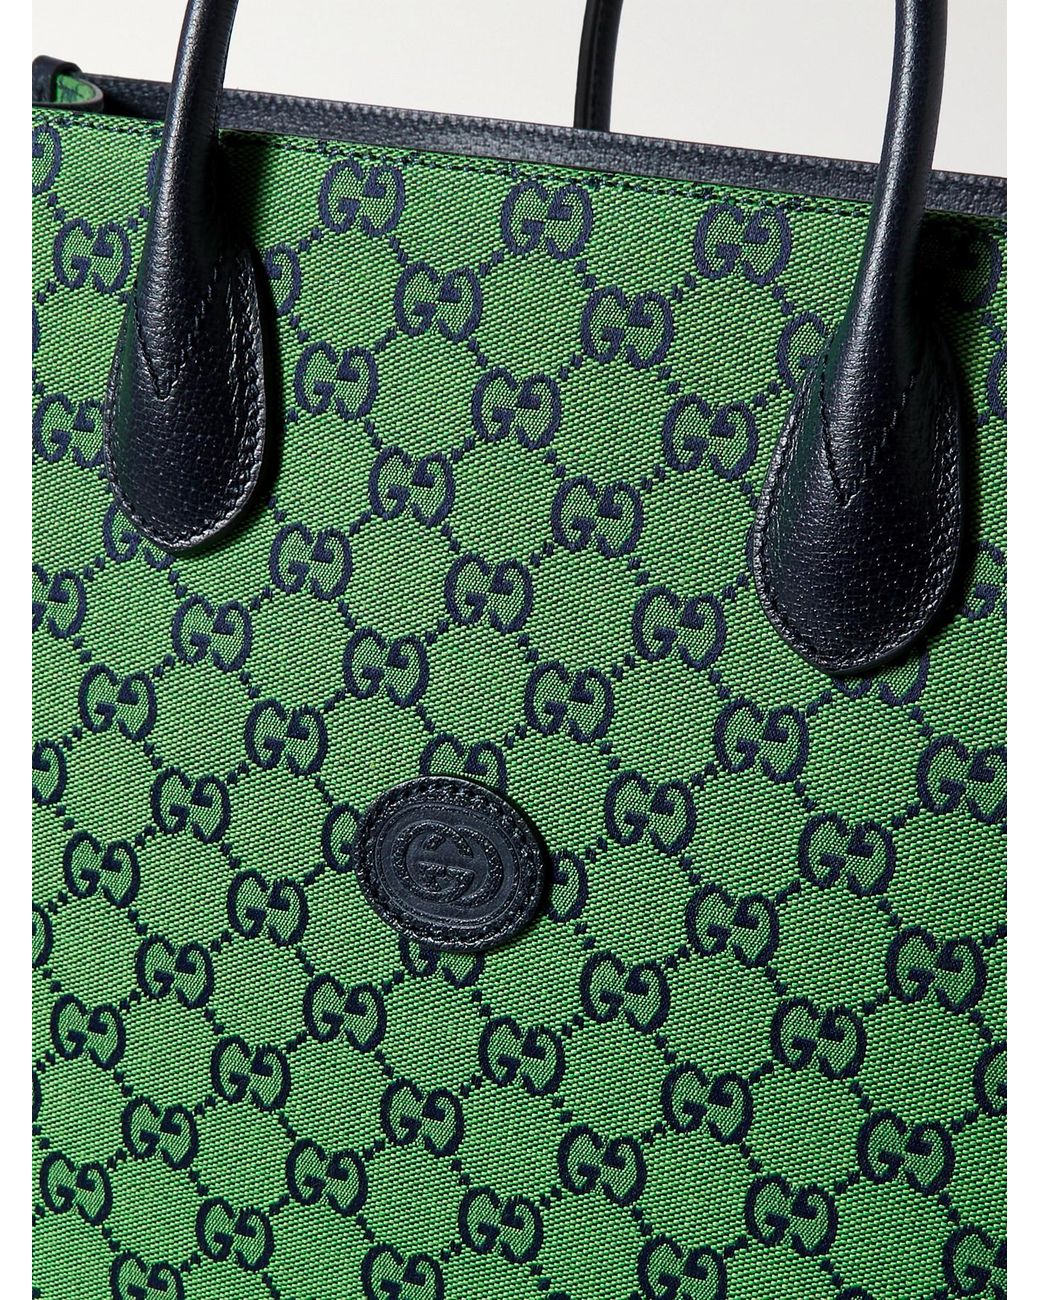 $1200 Gucci Monogram Dark Green Canvas Leather Trim Tote Bag Purse -  Lust4Labels